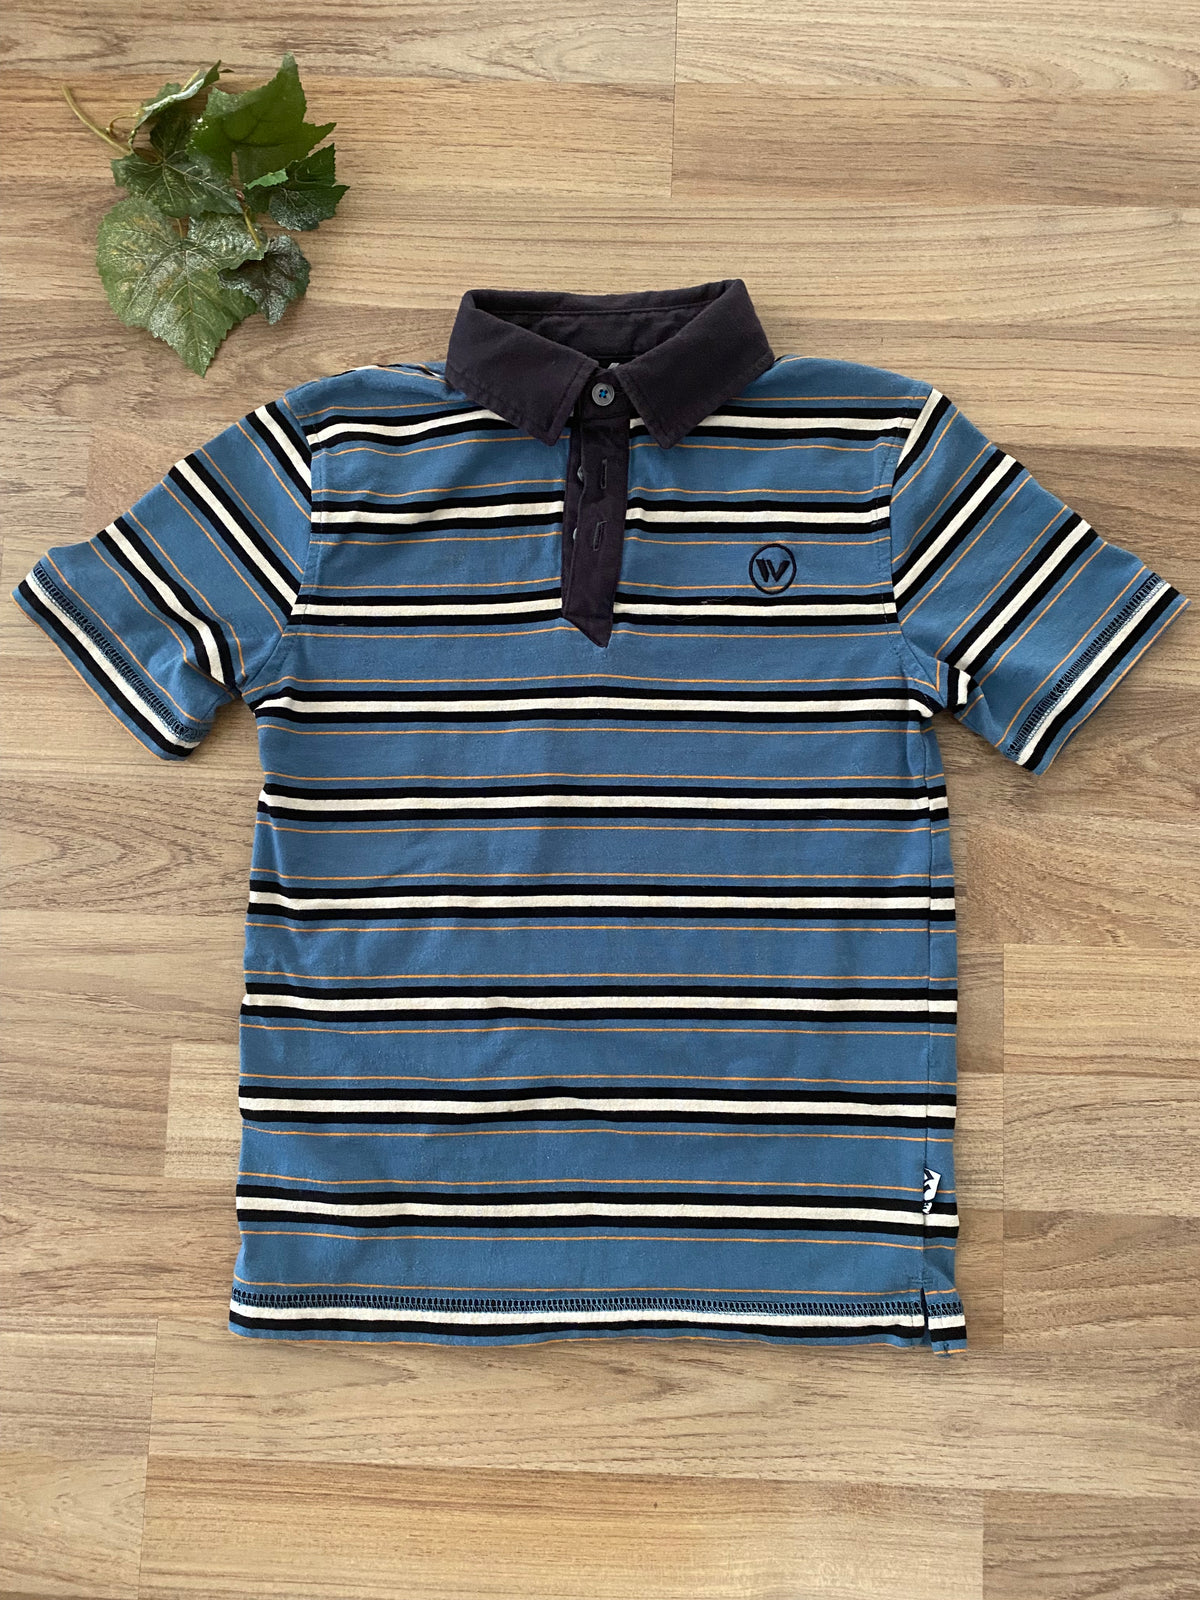 Short Sleeve Striped Shirt (Boys Size 7-8)